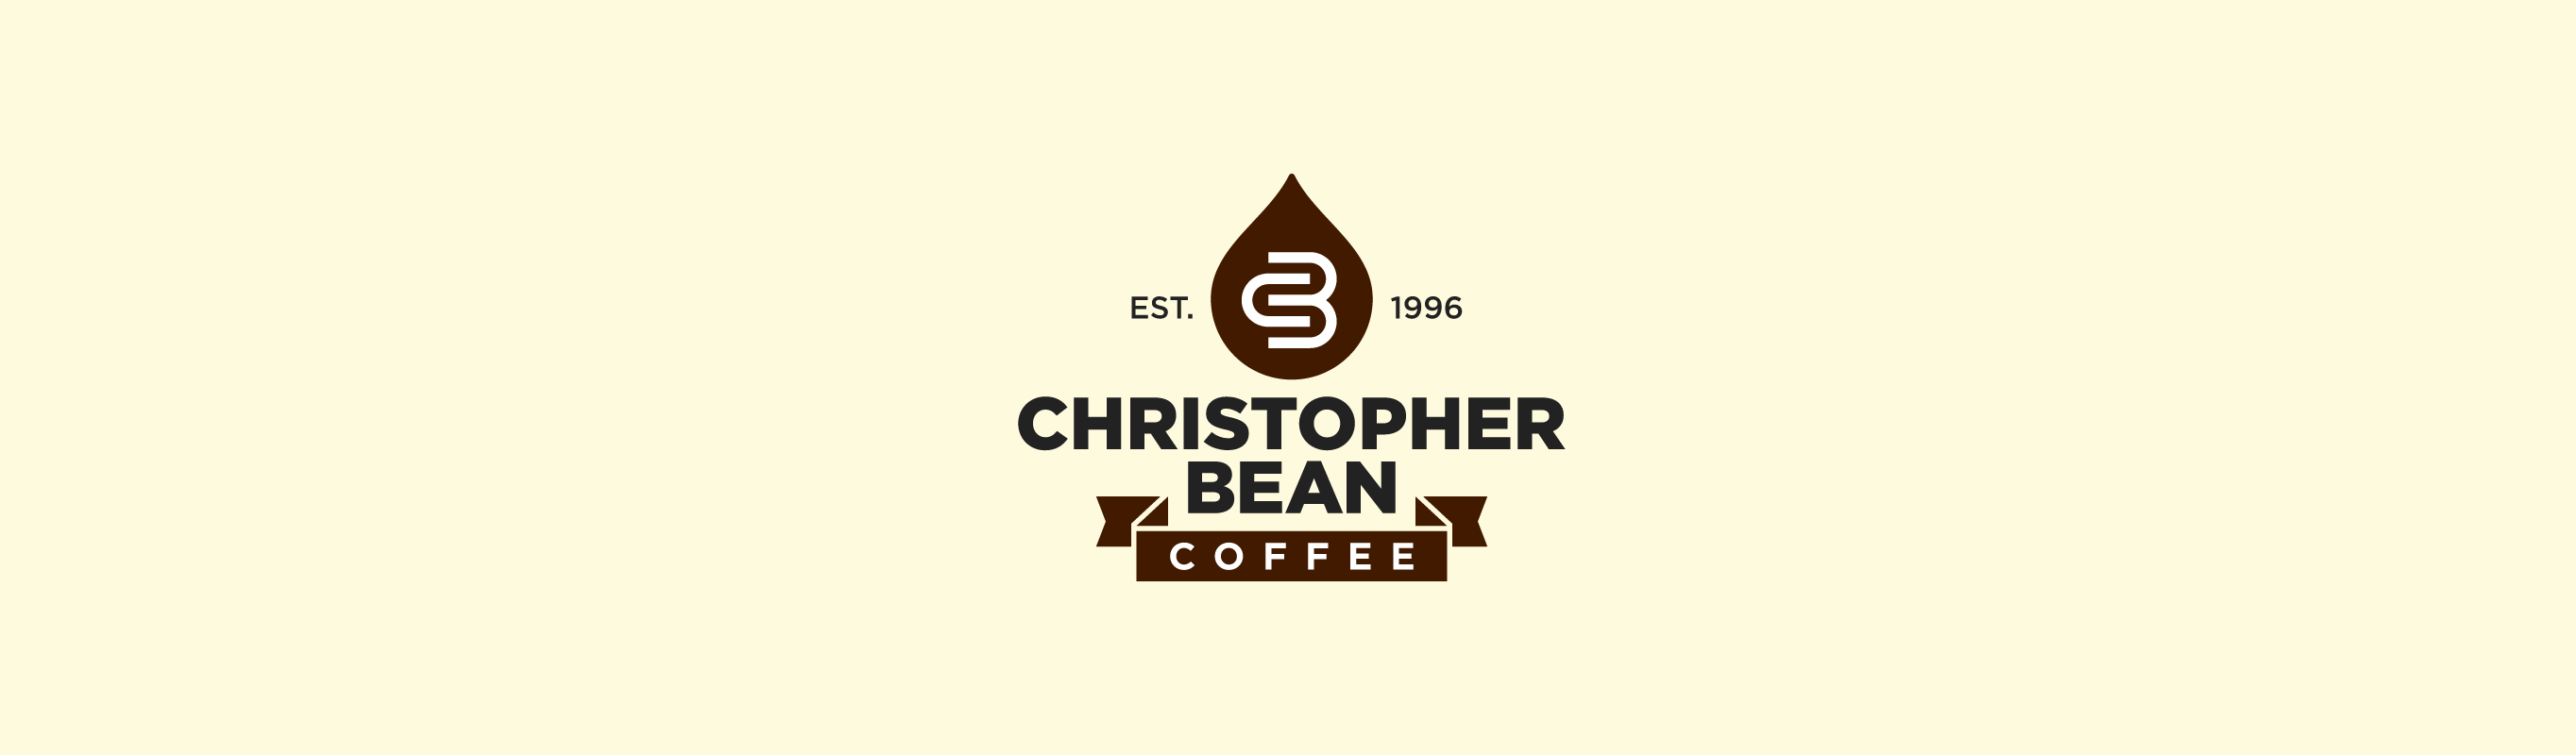 christopher bean portfolio center footer